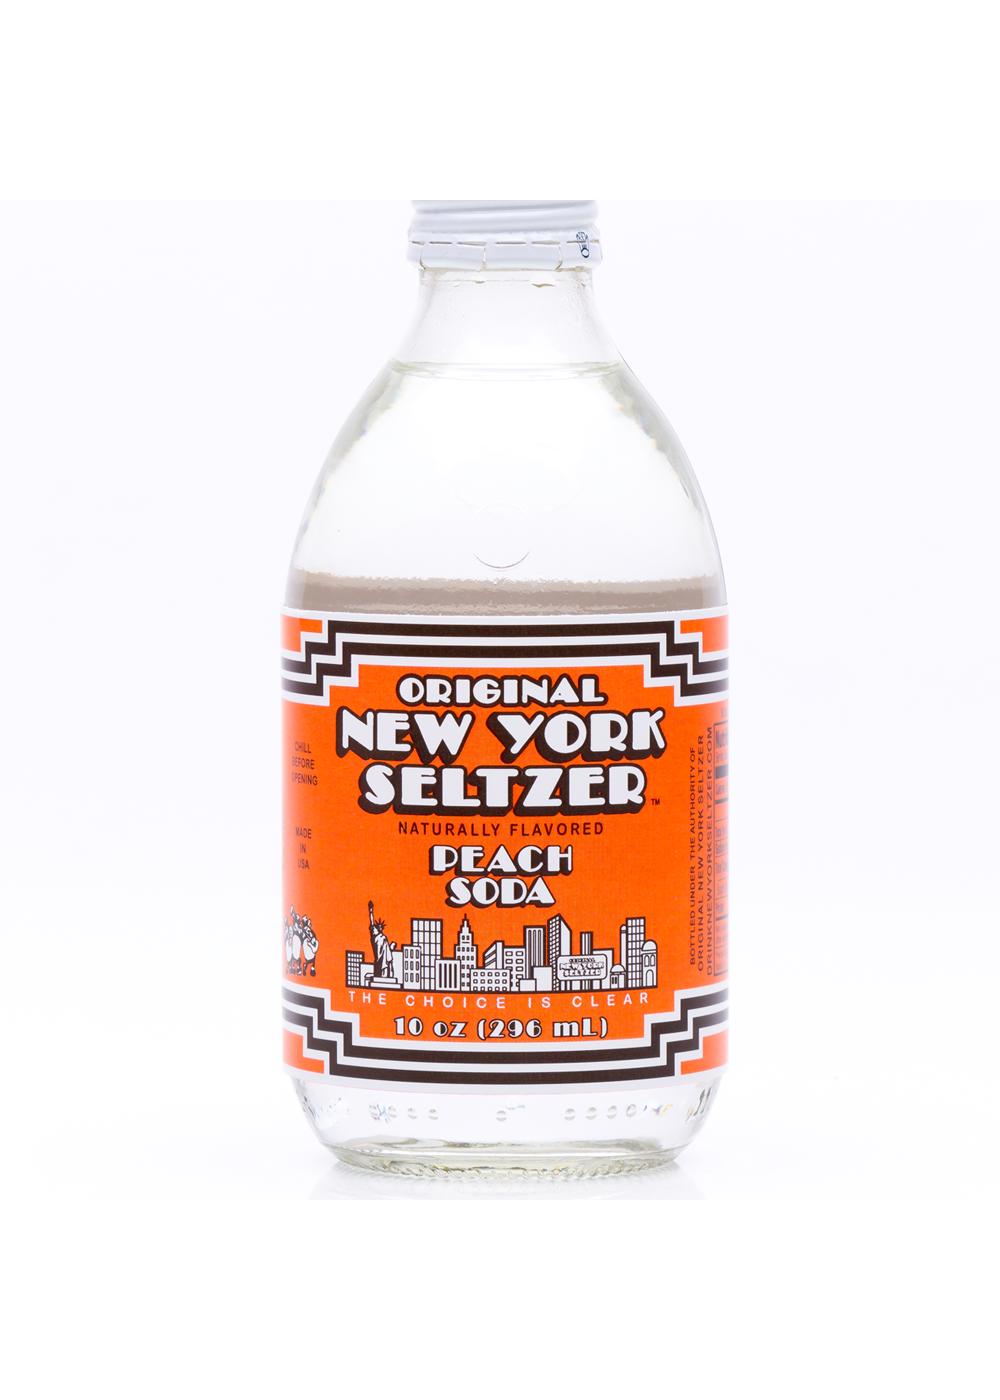 Original New York Seltzer Peach Soda; image 3 of 3